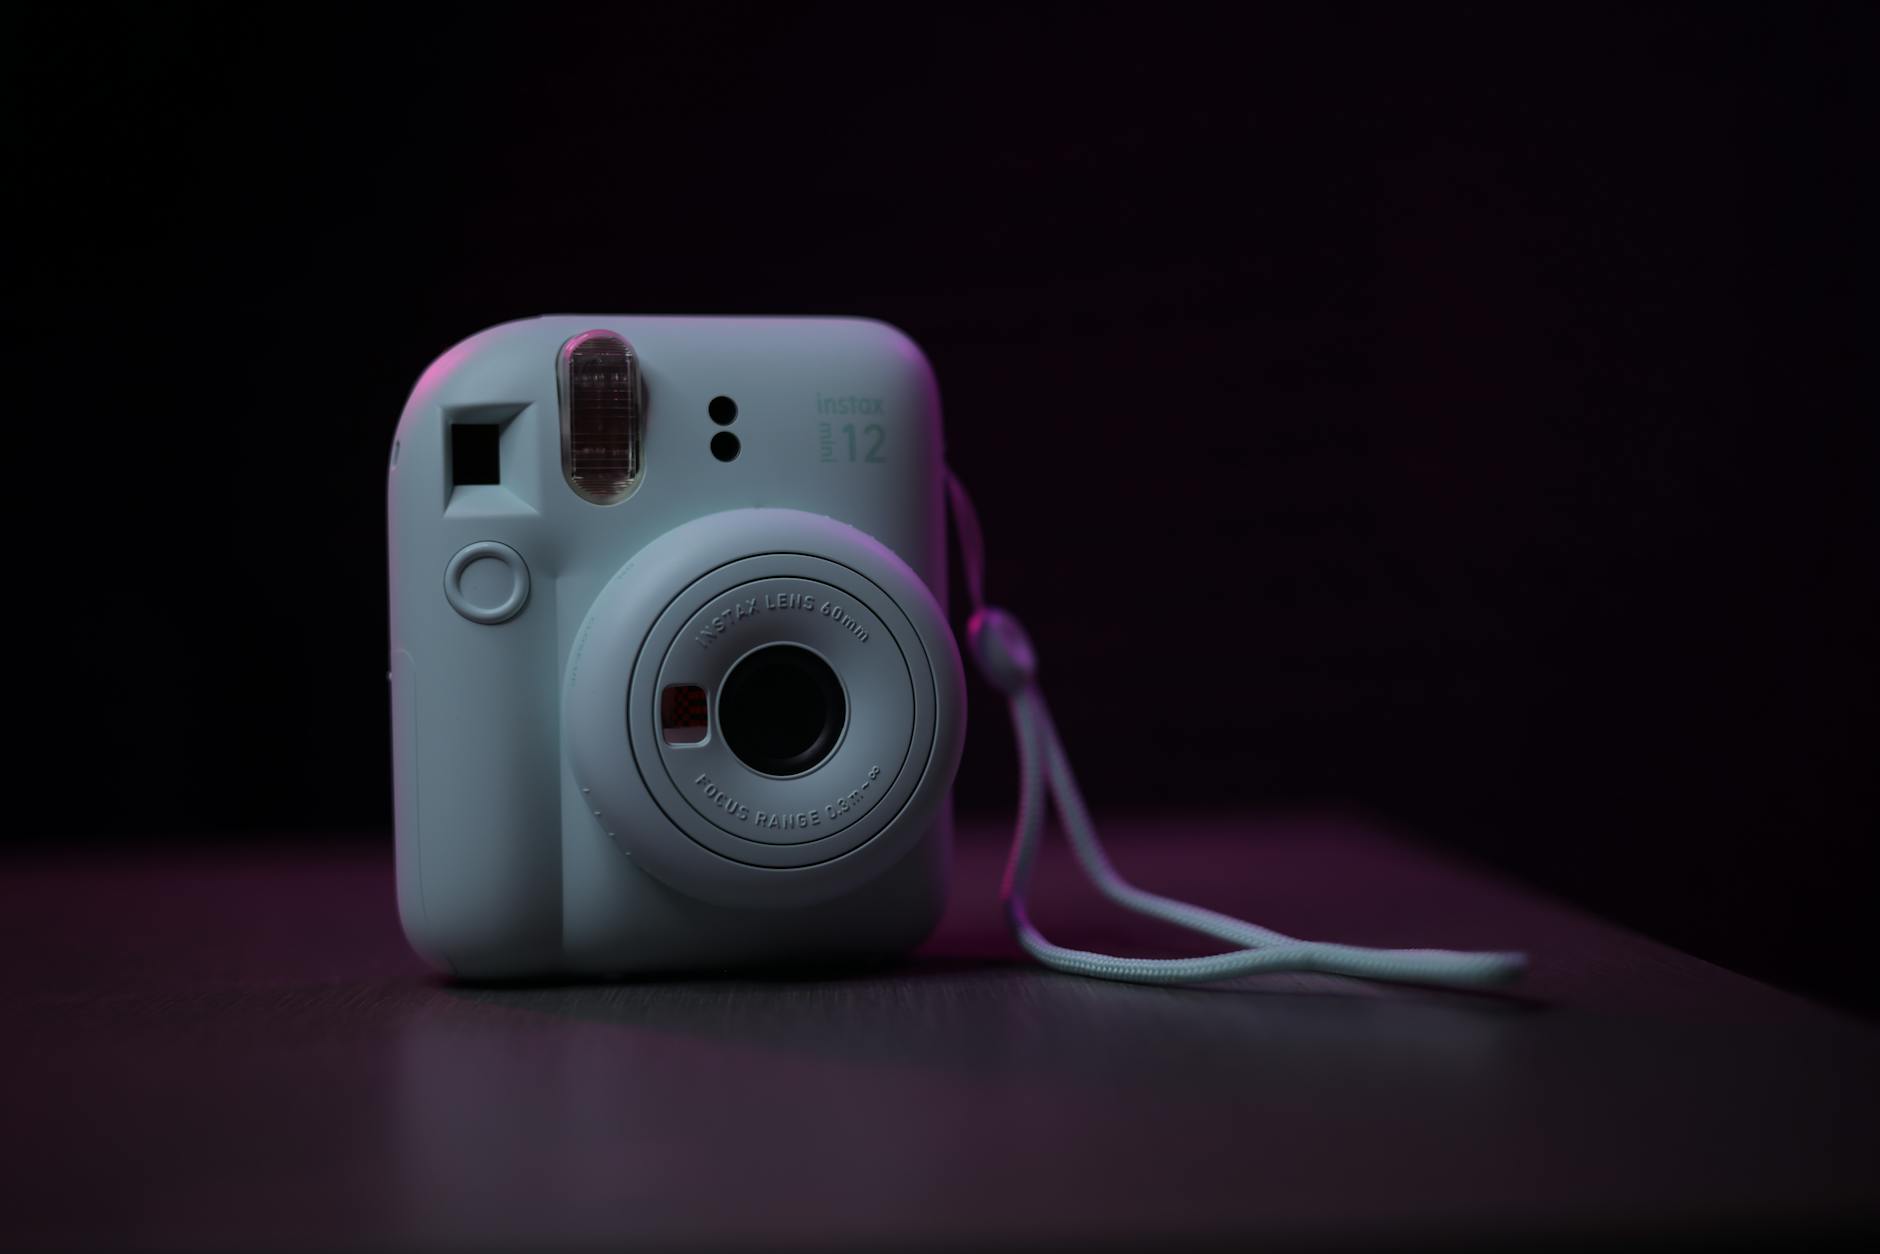 A white polaroid camera with a purple light